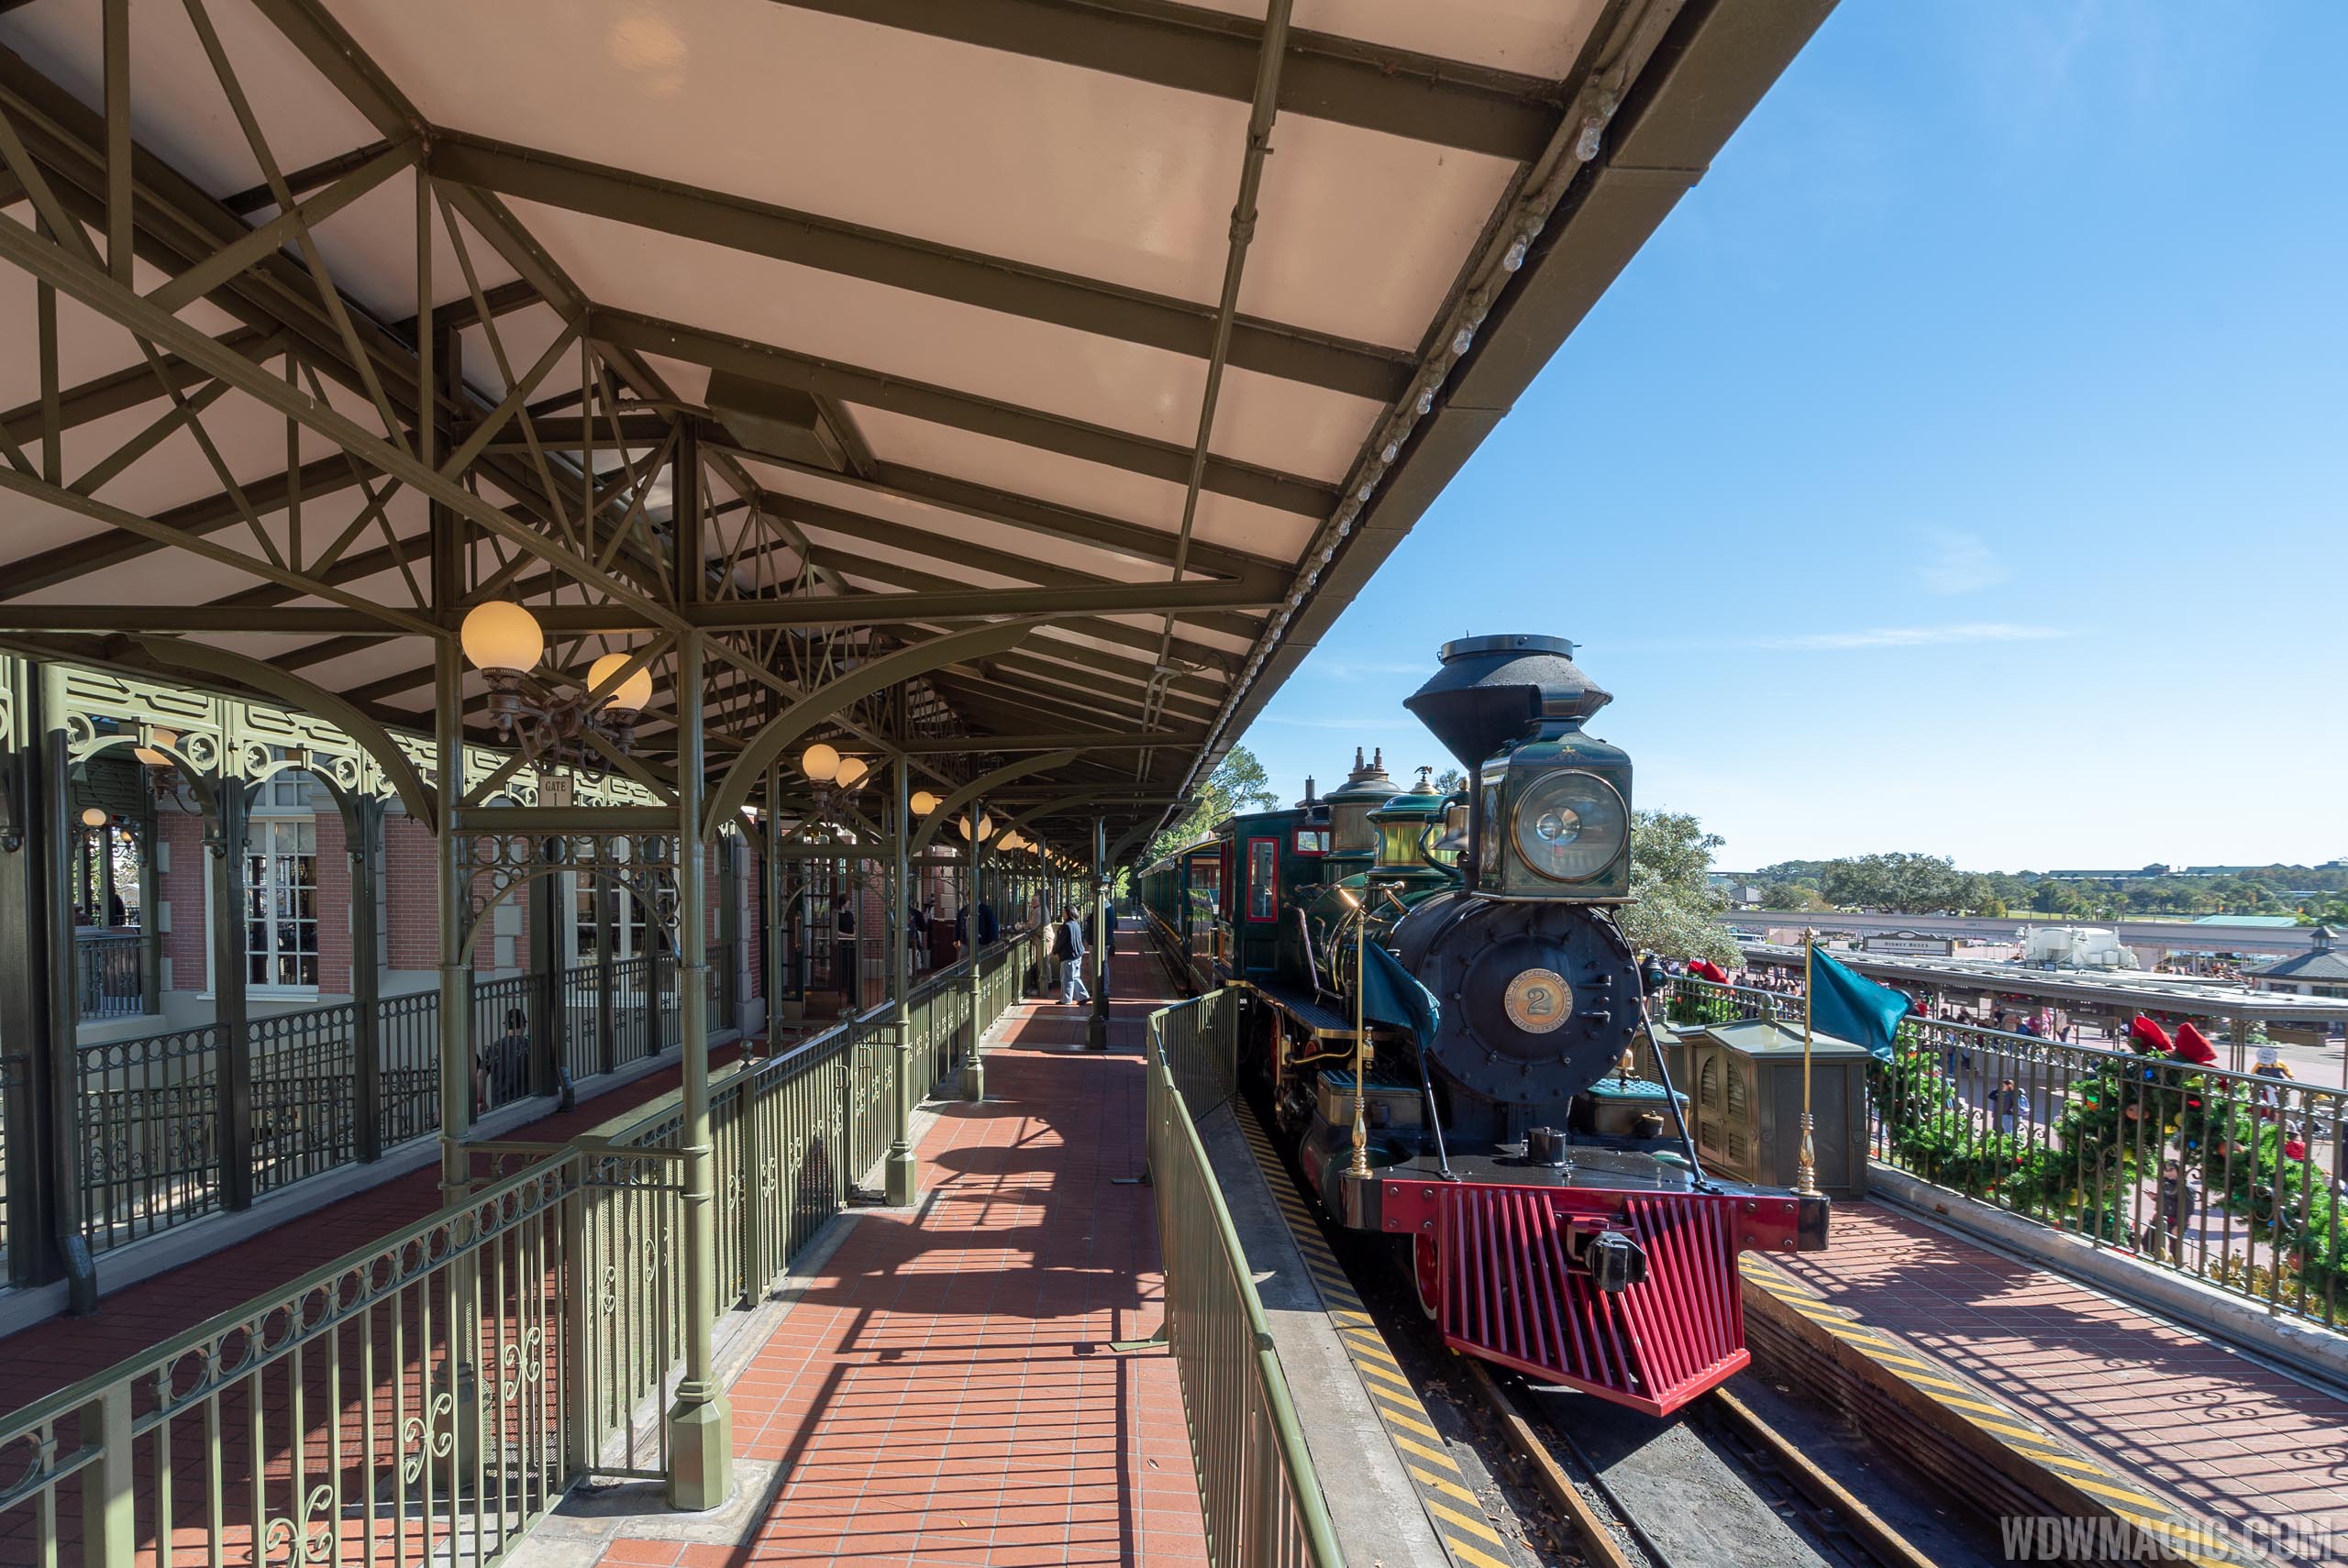 PHOTOS: We're FINALLY Seeing Progress on the Magic Kingdom Train Station!